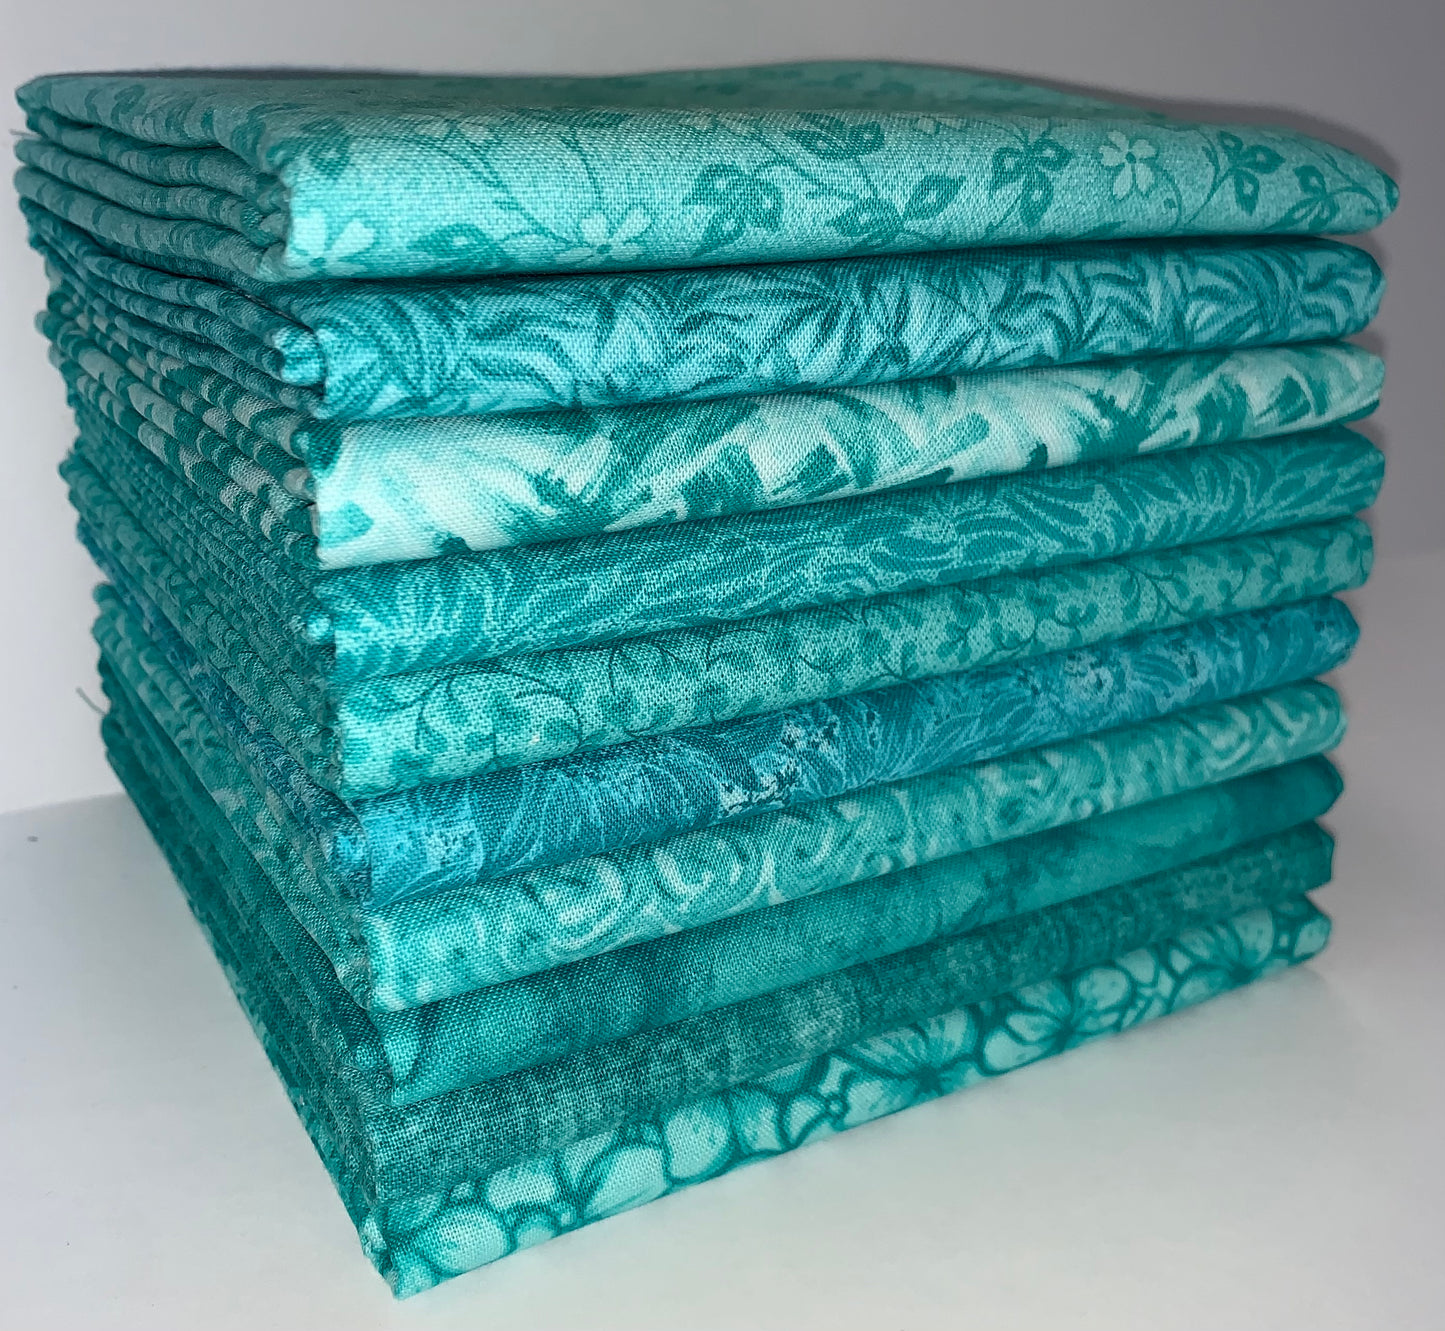 Basic Colors - Caribbean Half-yard Bundle - 10 Fabrics, 5 Total Yards